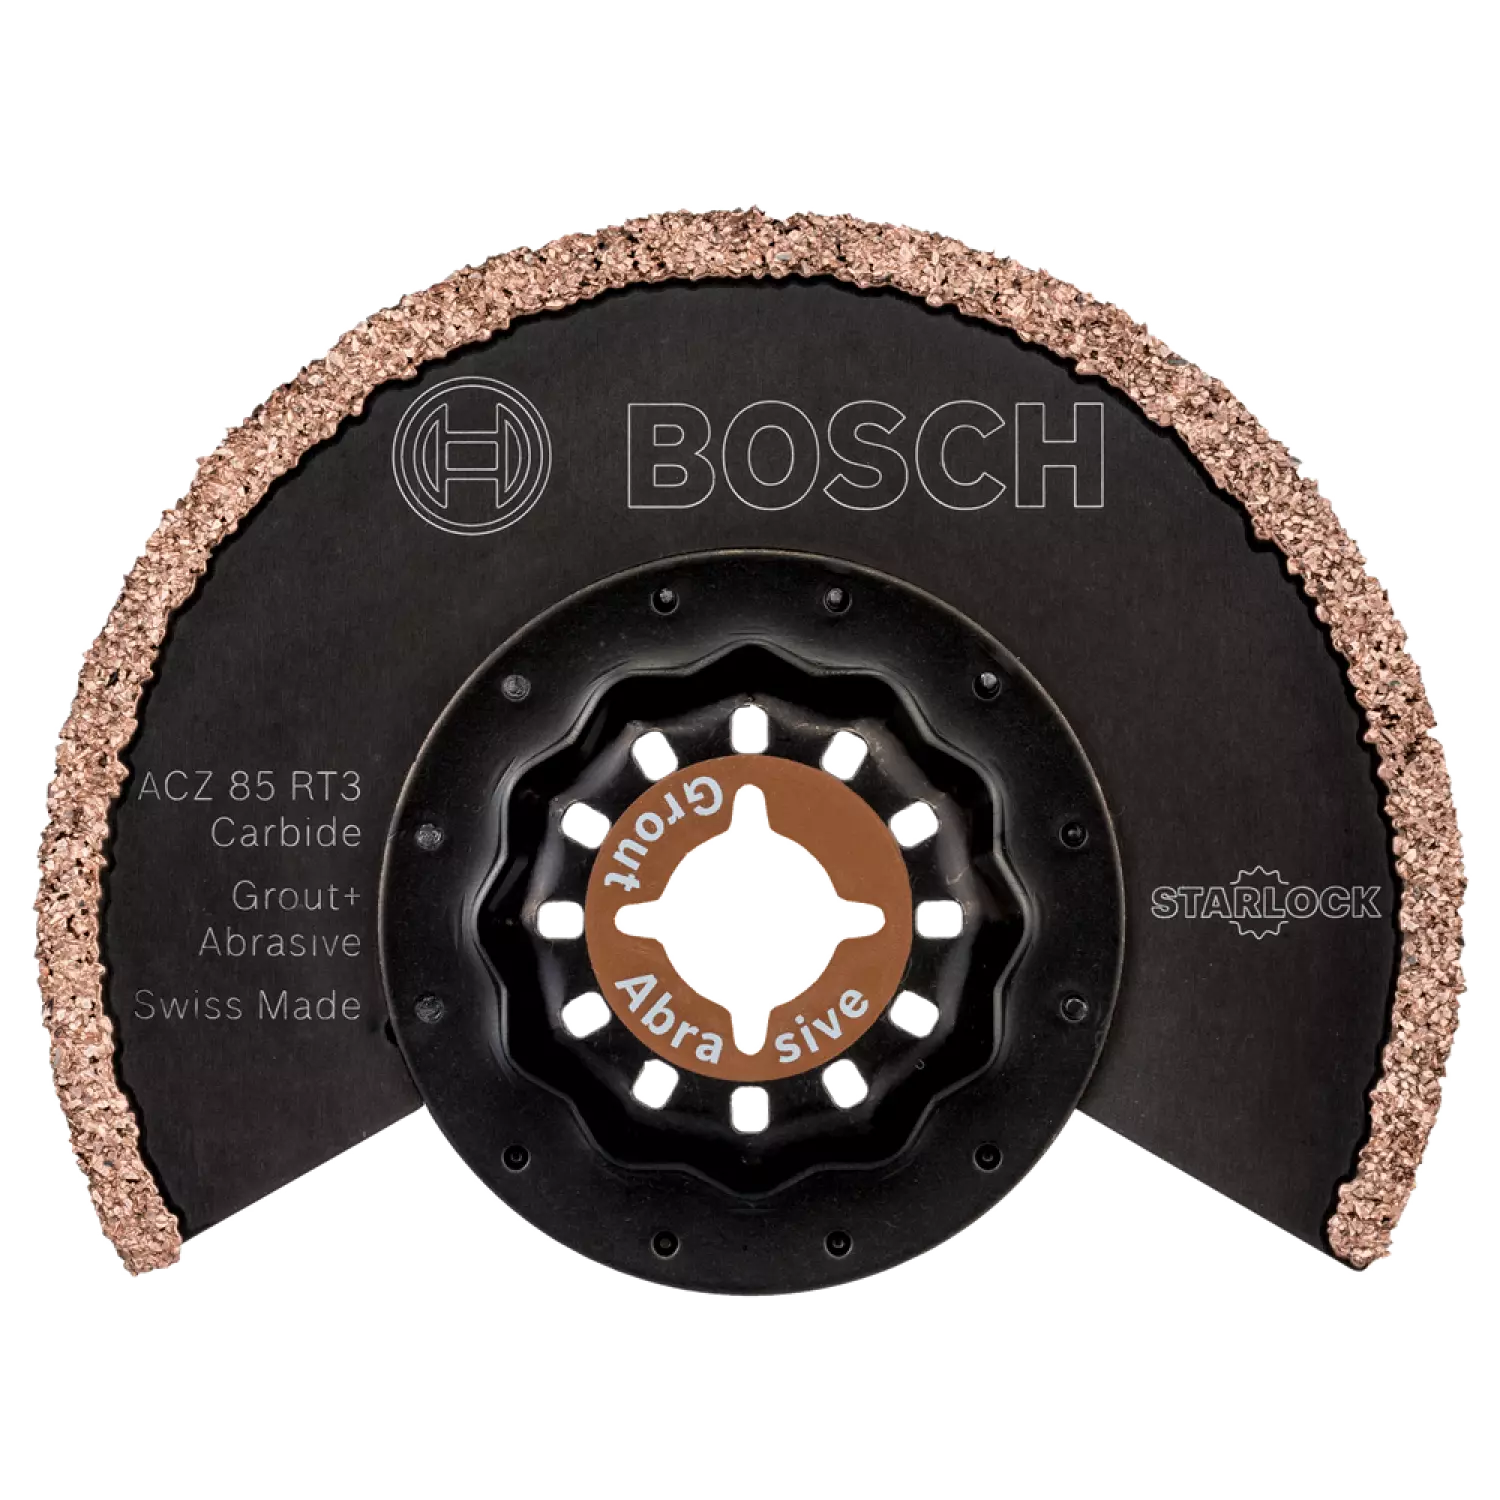 Bosch 2608661642 - Starlock ACZ 85 RT3 Carbide, Grout+Abrasive 85